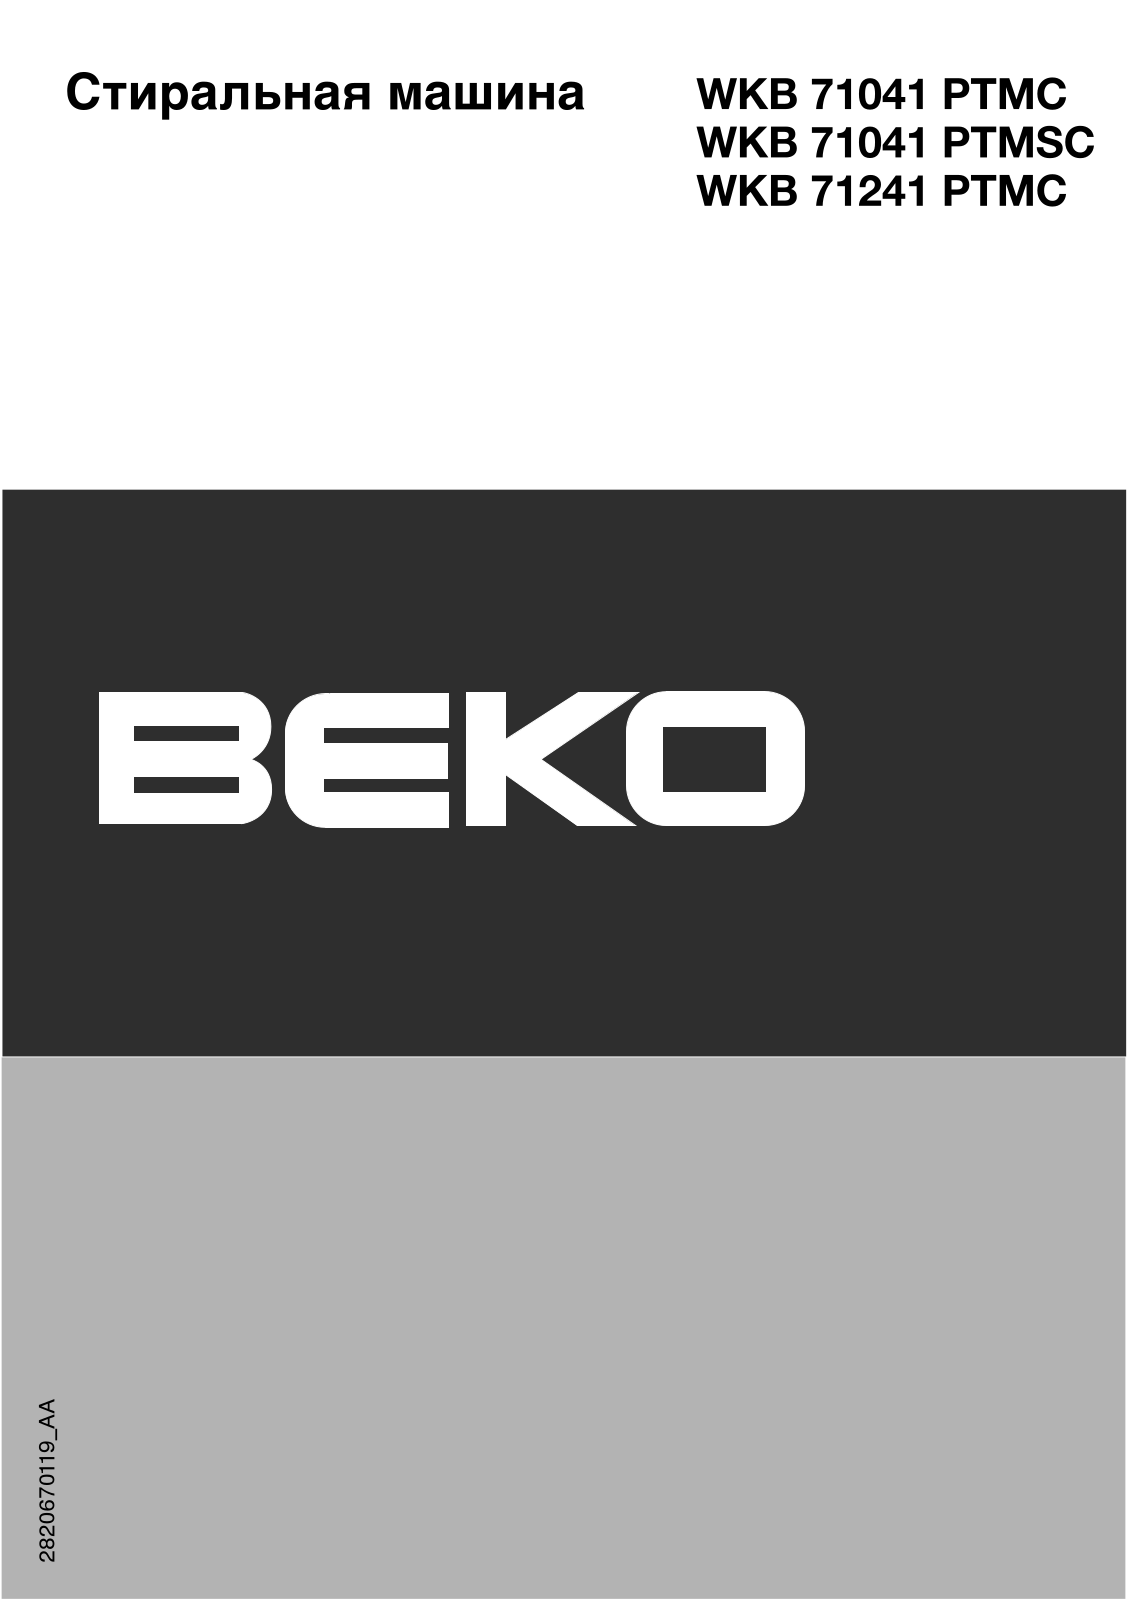 Beko WKB 71041 PTMC, WKB 71241 PTMC, WKB 71041 PTMSC User Manual